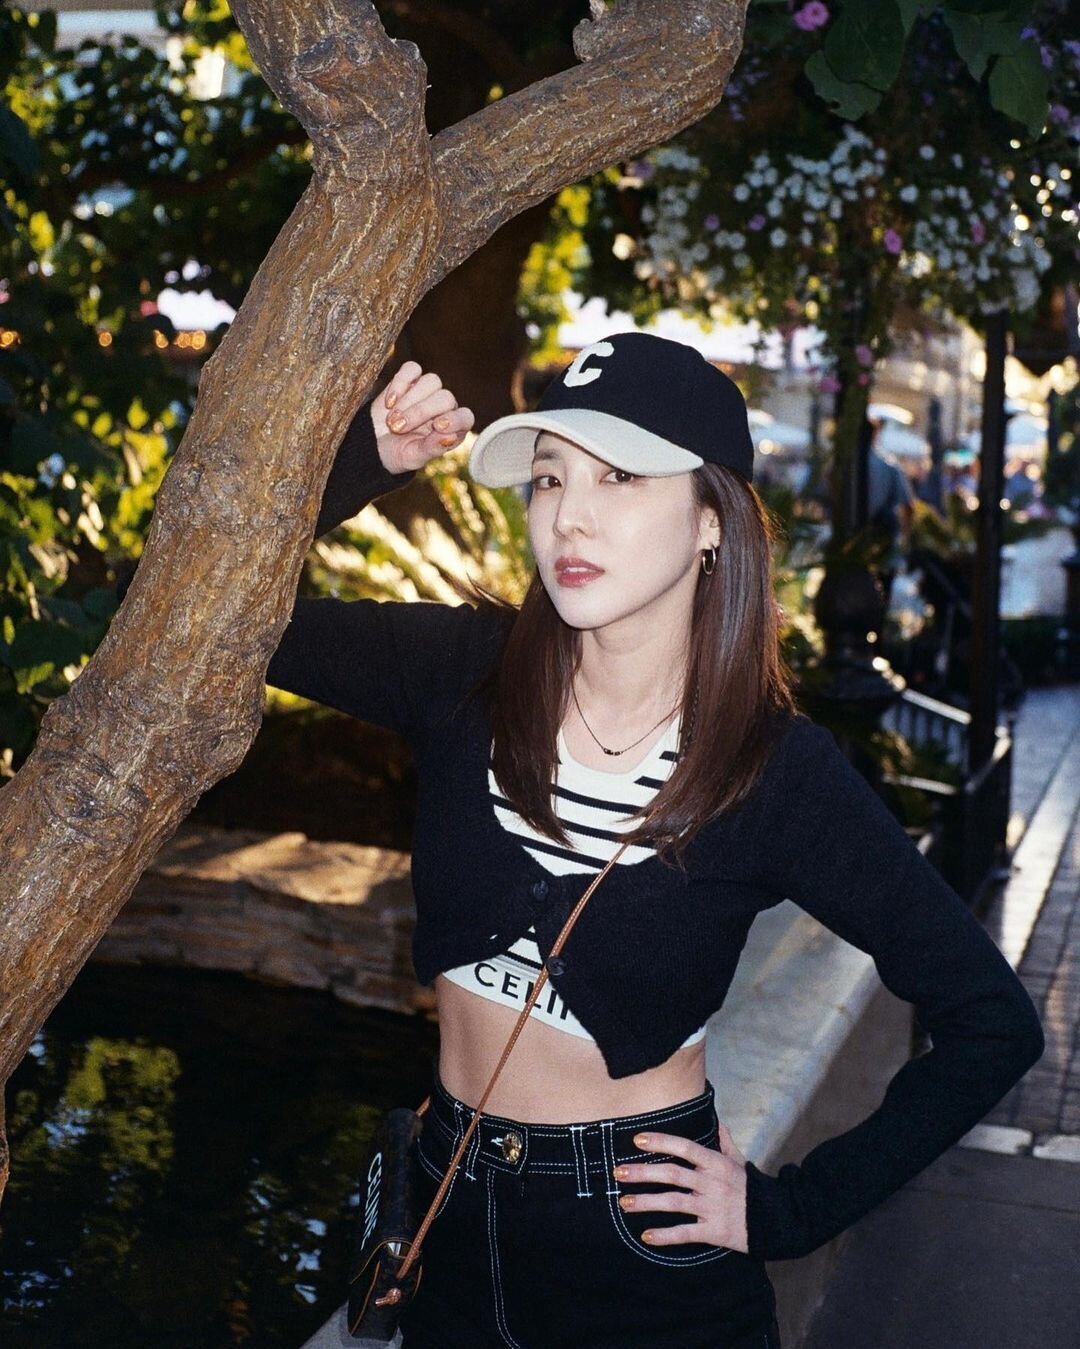 Dara Style on X: [SNS Update] 170703 - #DARA's Instagram post, wearing:  #LOUIS_VUITTON Nano Turenne  / X